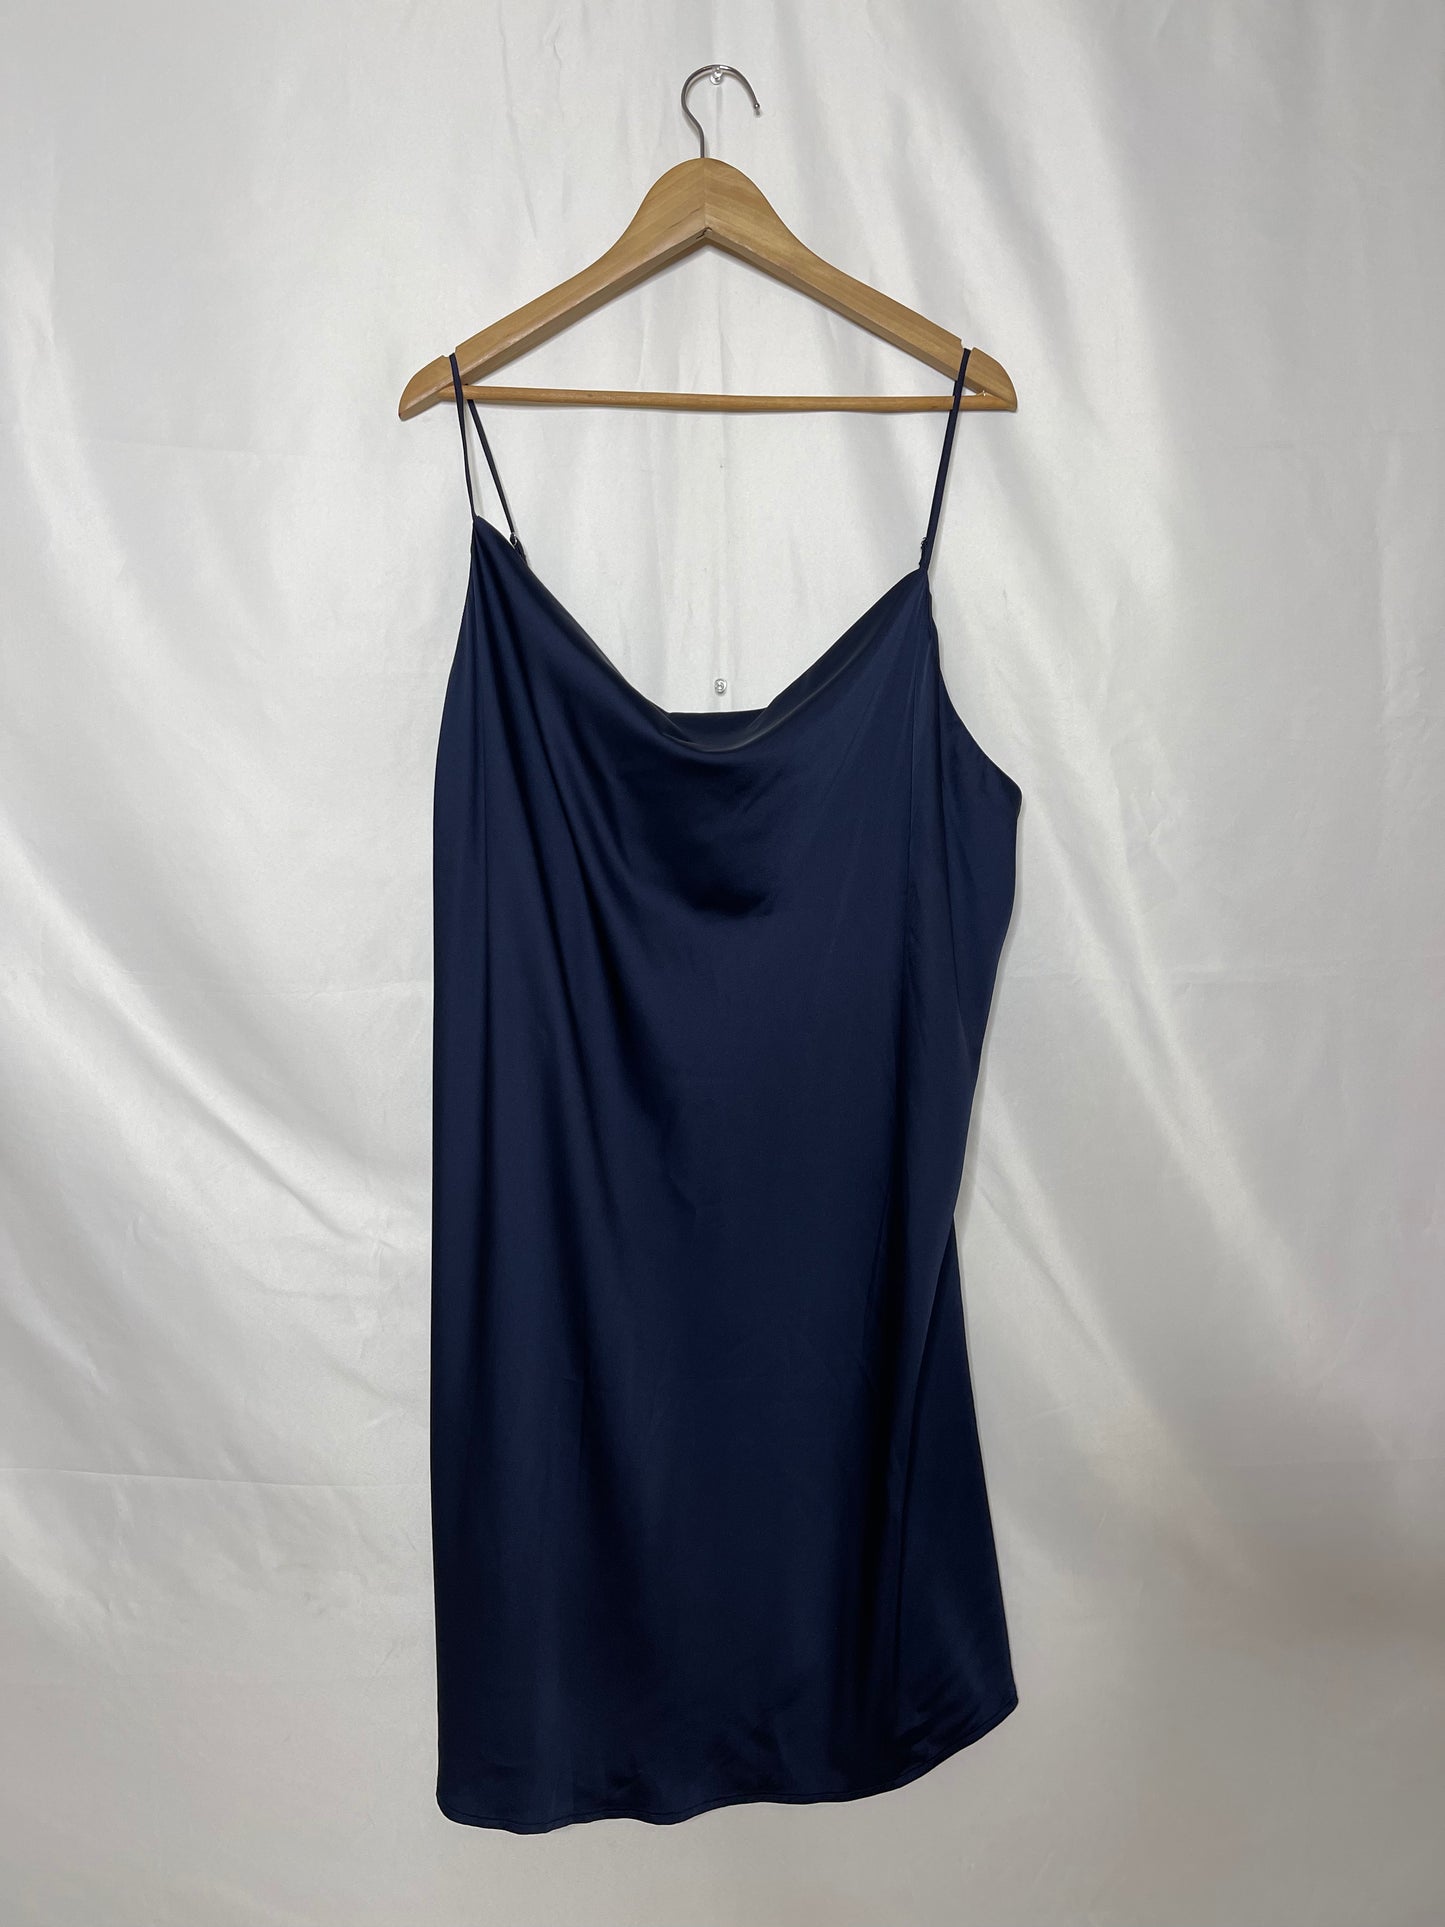 2x Navy blue A Line Dress Tags